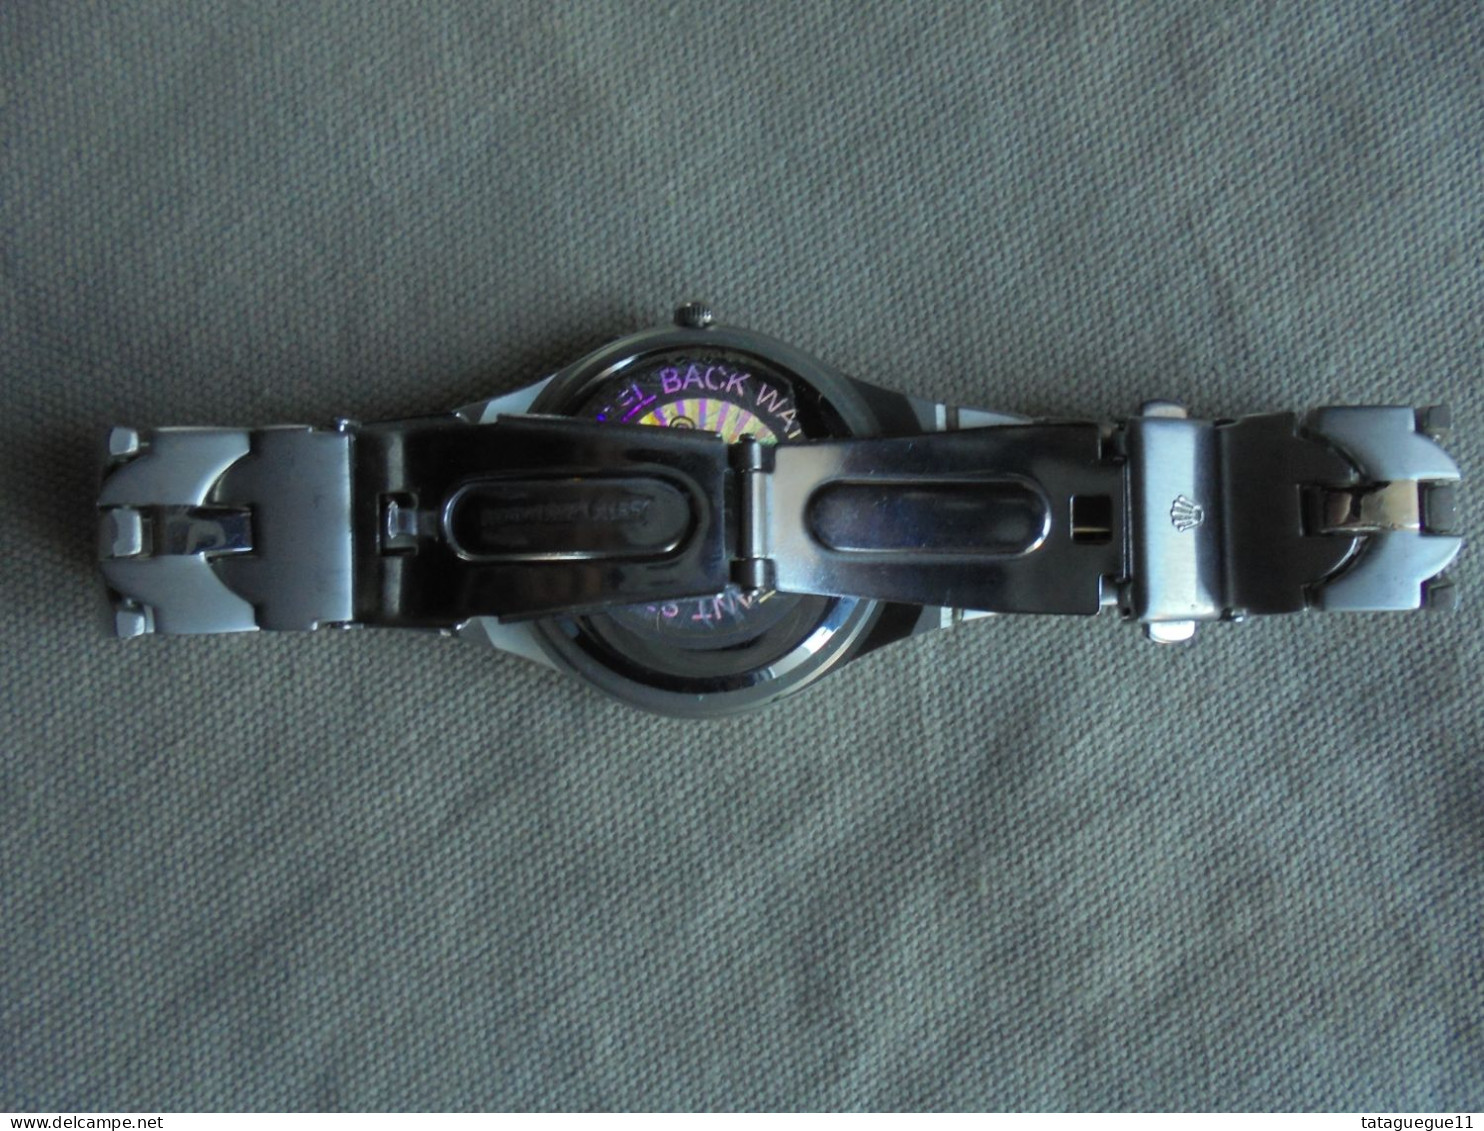 Vintage - Montre Bracelet Homme IK Colleiten - Horloge: Modern